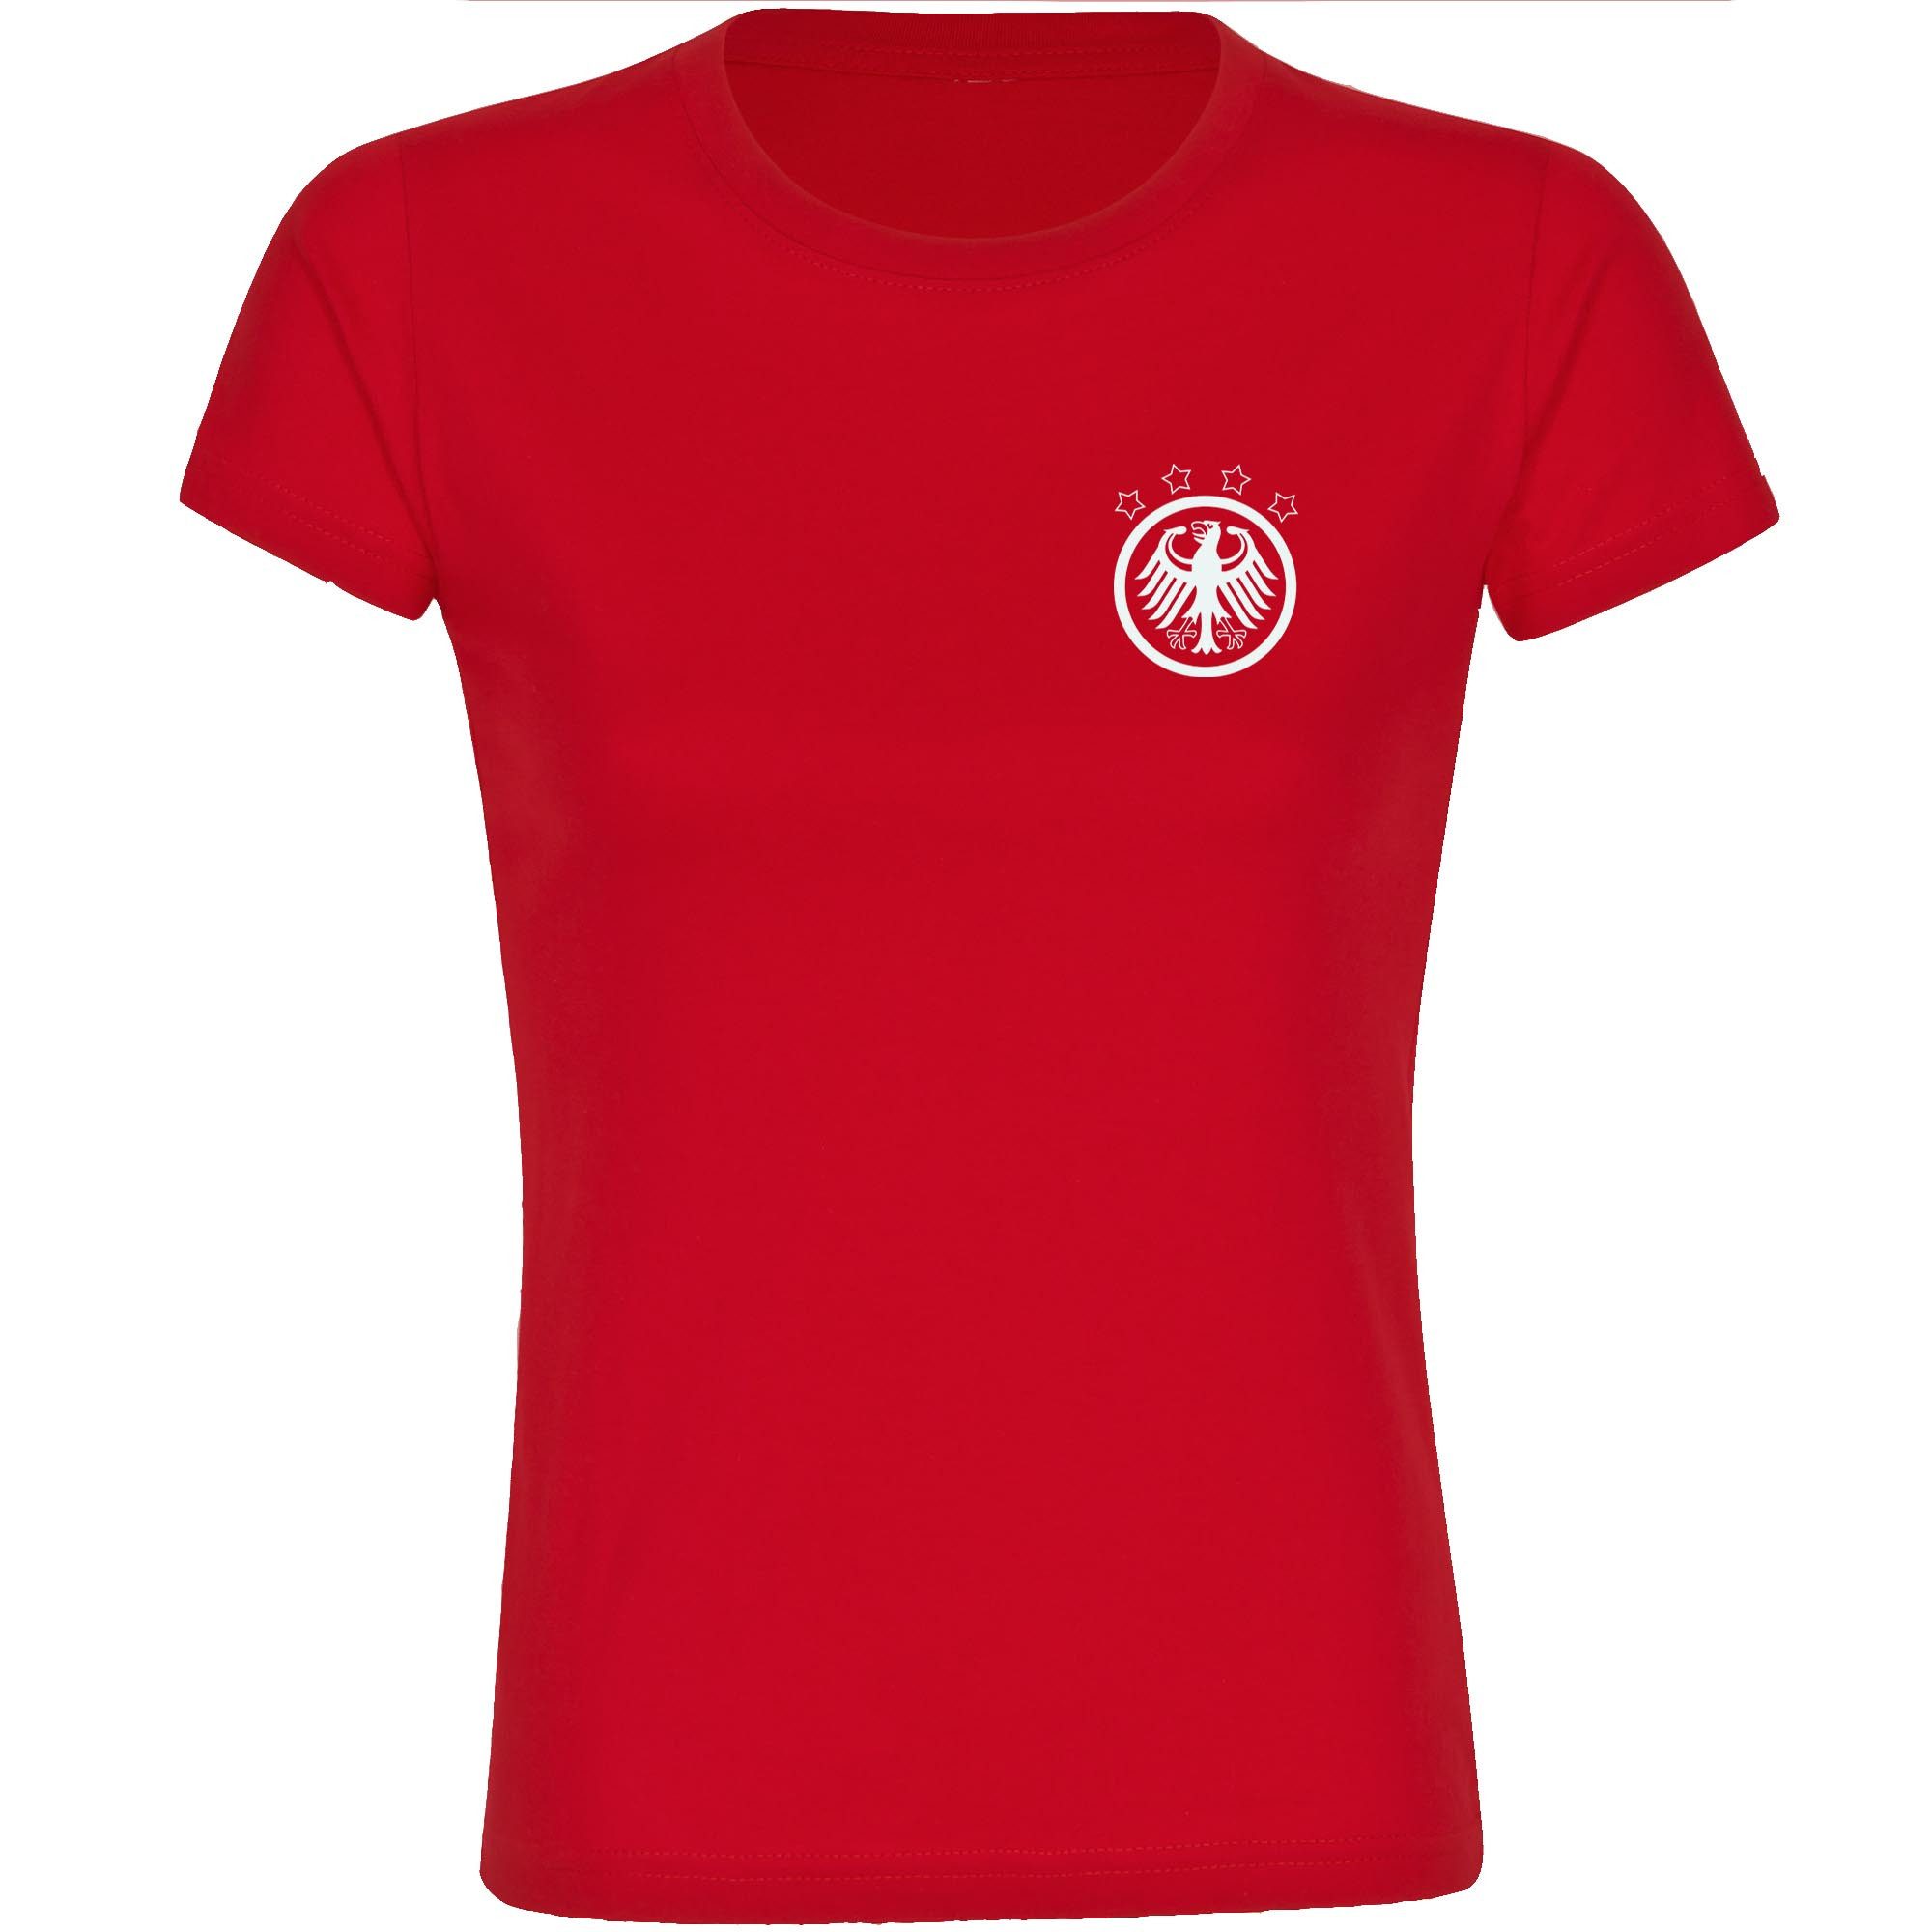 multifanshop T-Shirt Damen Germany - Adler Retro - Frauen